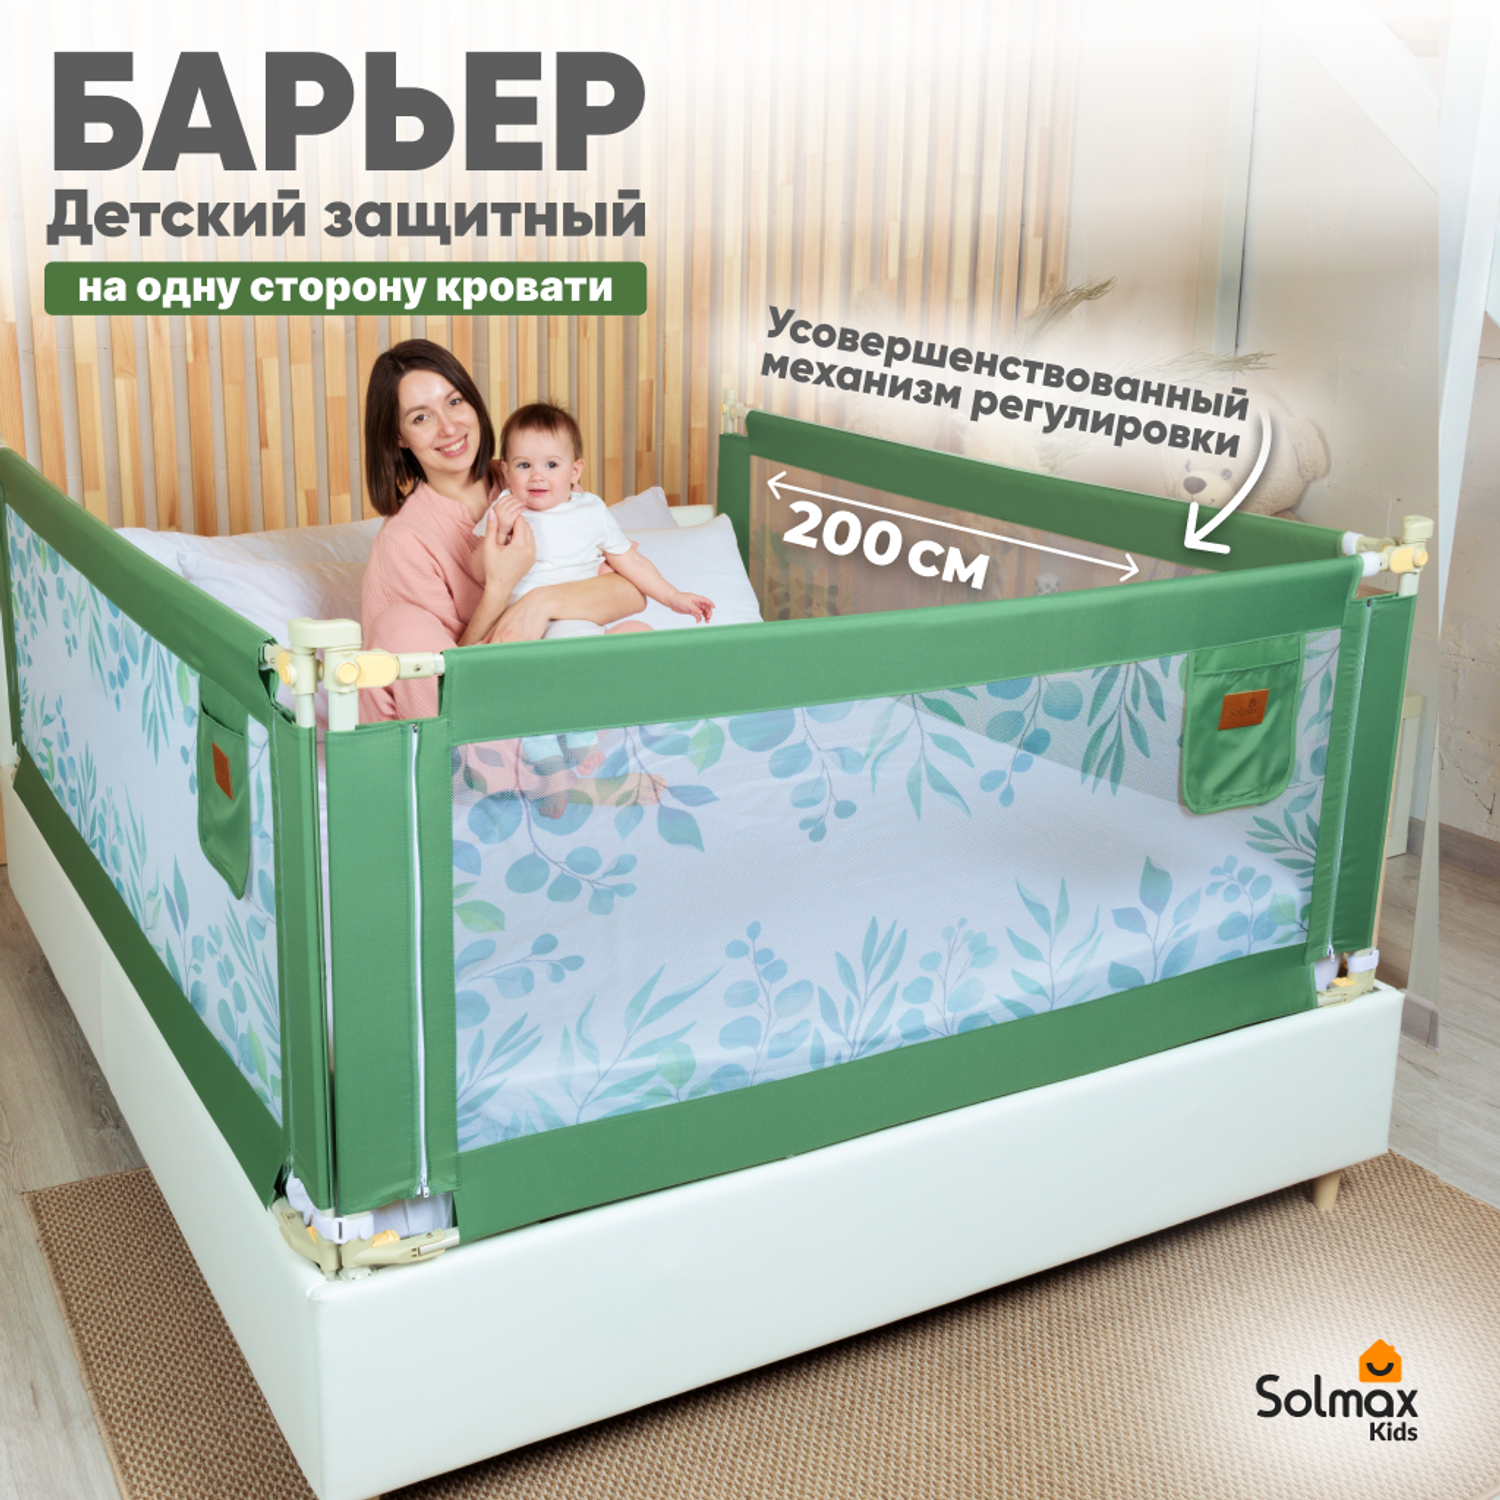 Барьер для кровати Solmax зеленый 200 см на одну сторону - фото 1